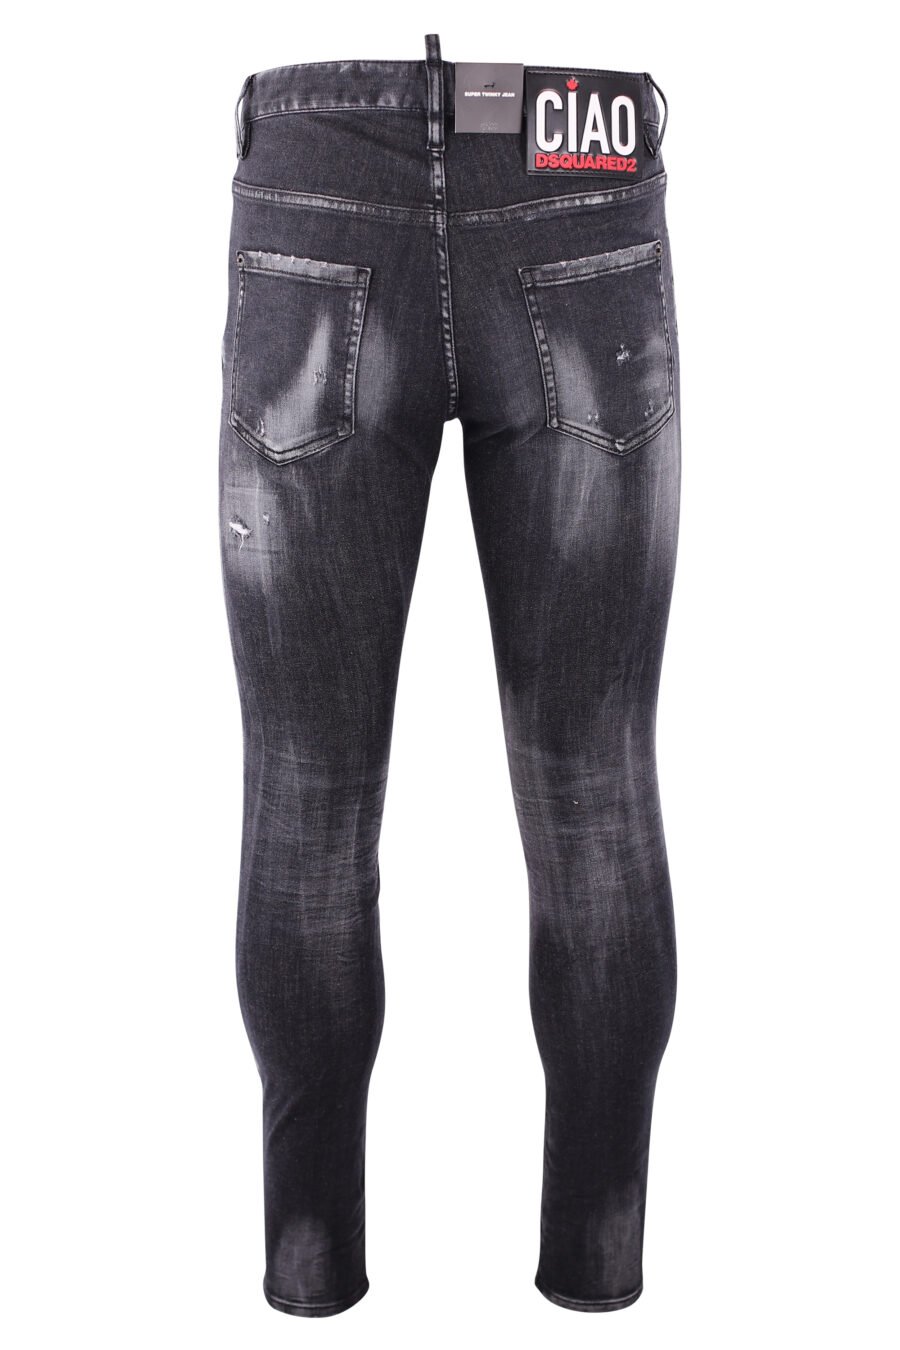 Pantalón vaquero "super twinkie" negro desgastado con logo "D2" negro - IMG 3253